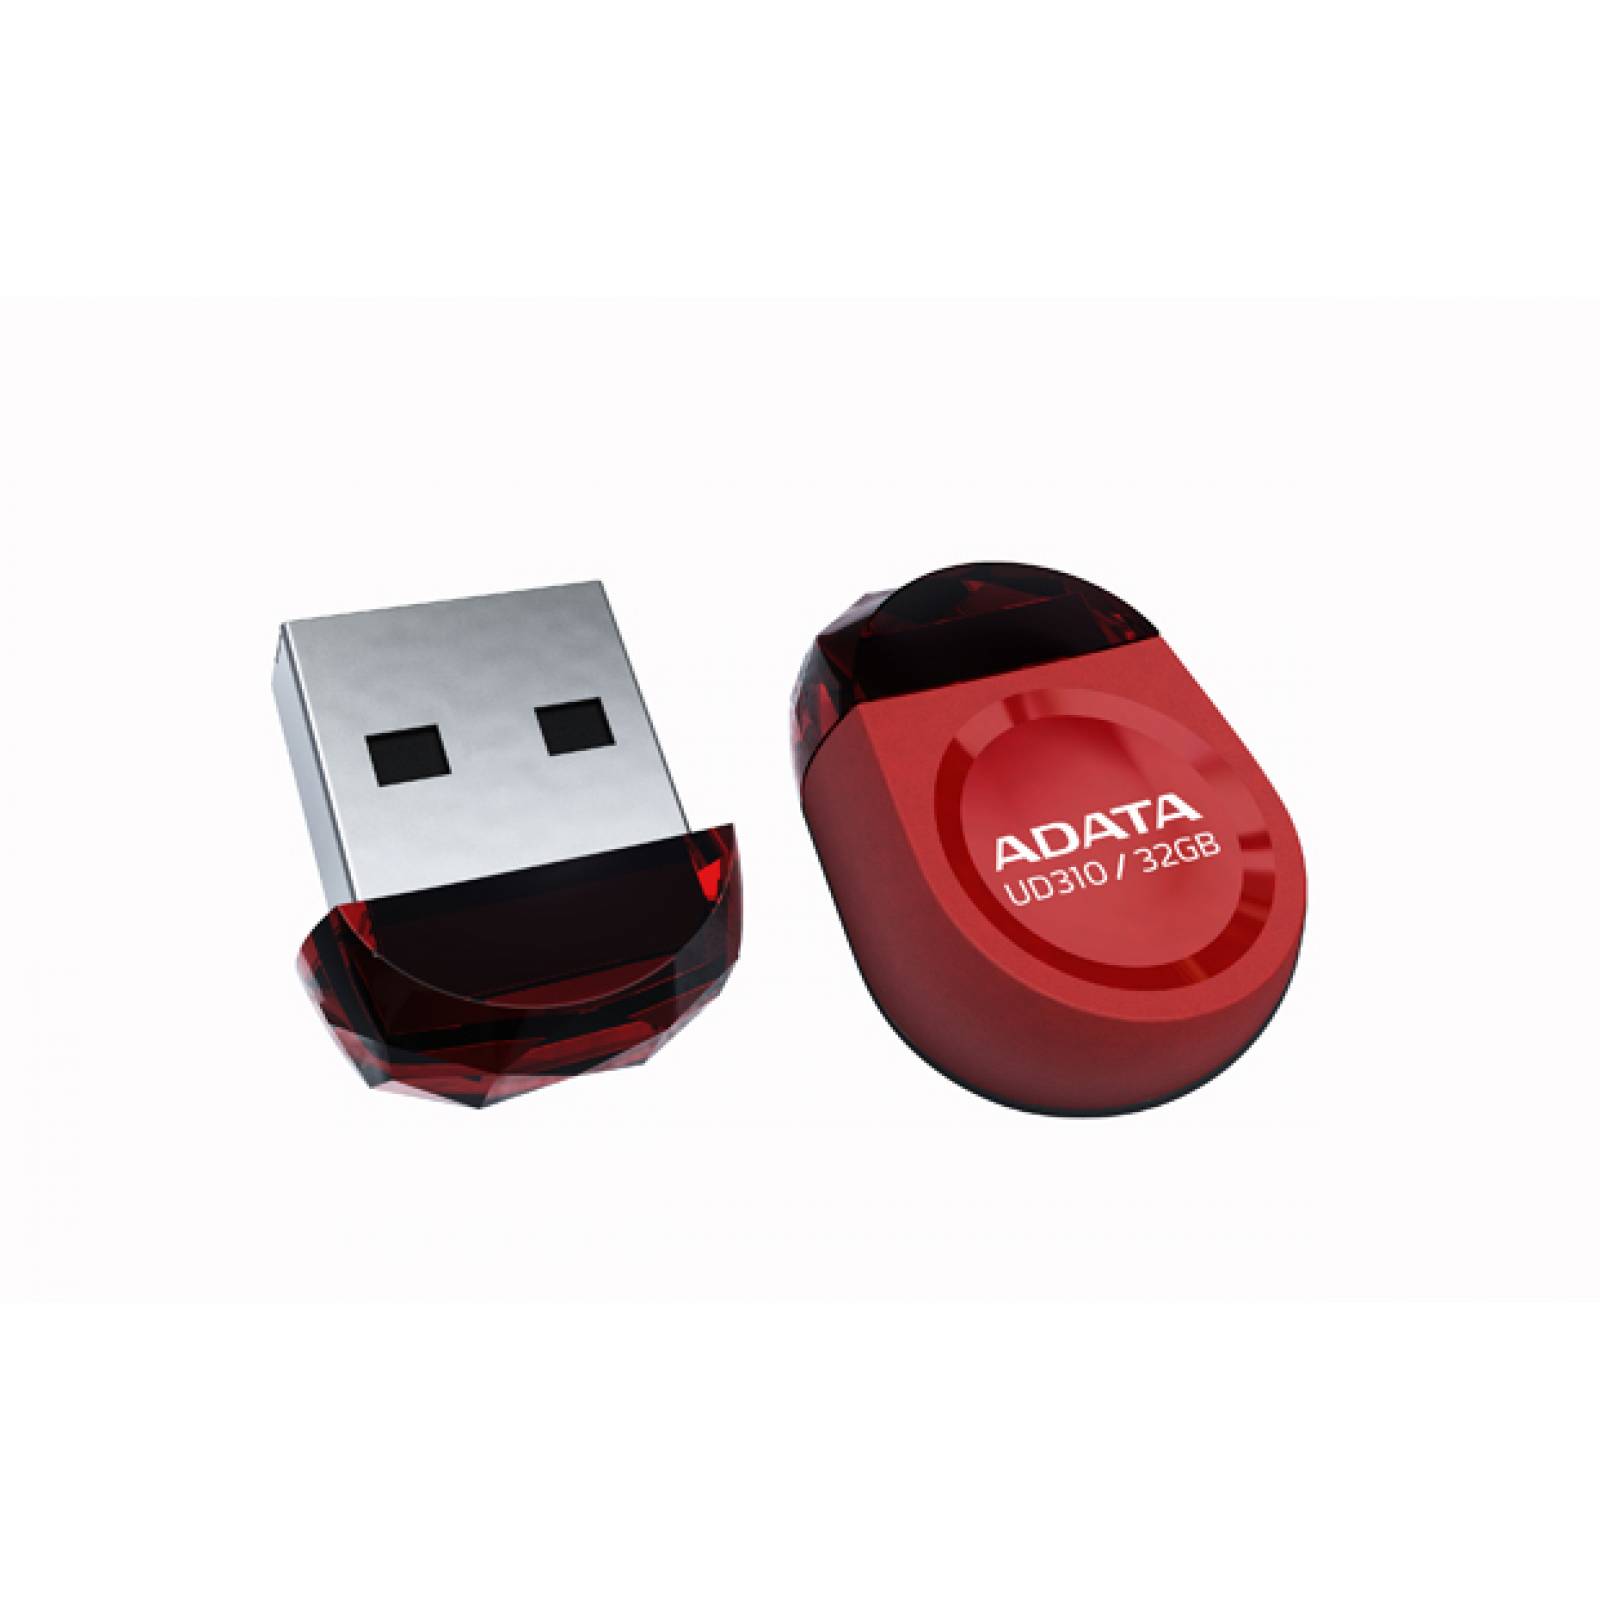 Memoria USB 2.0 Adata UD310 32GB Color Rojo